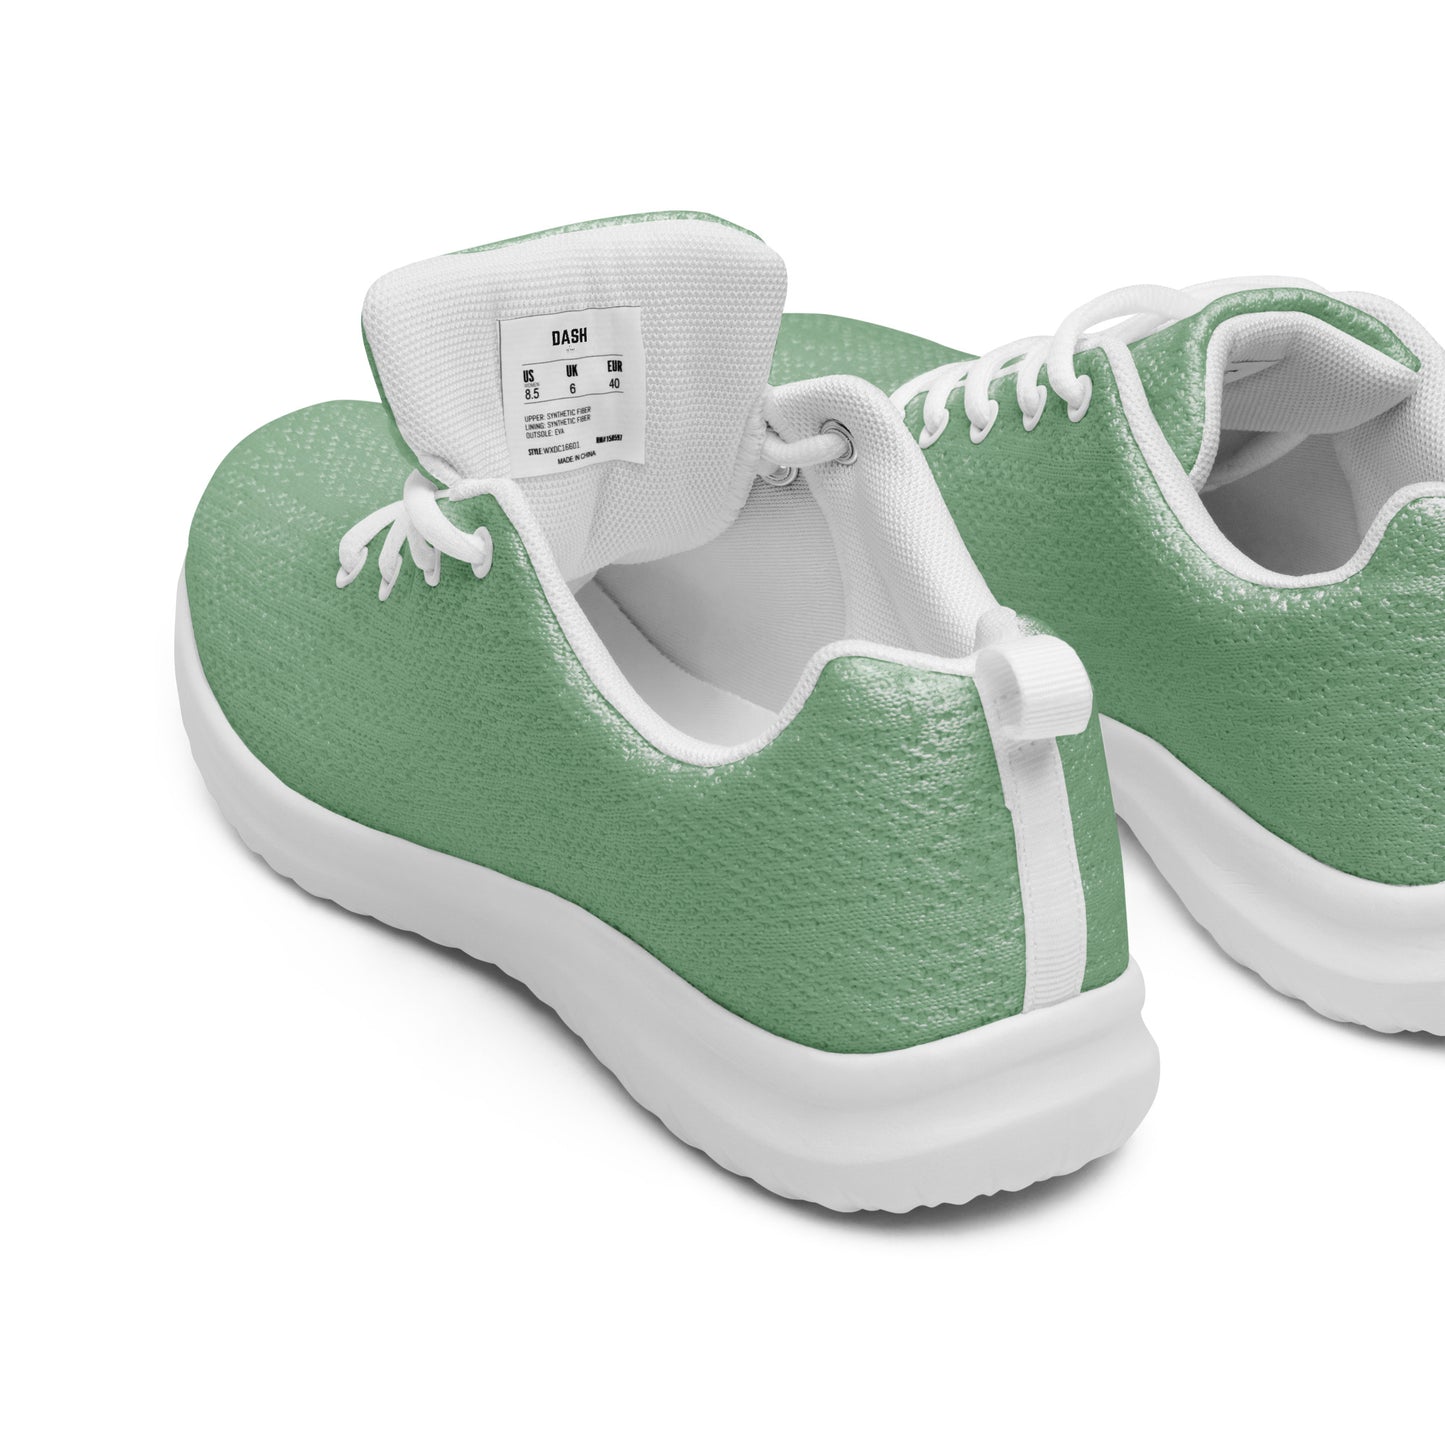 DASH Sage Green Women’s Athletic Shoes Lightweight Breathable Design by IOBI Original Apparel